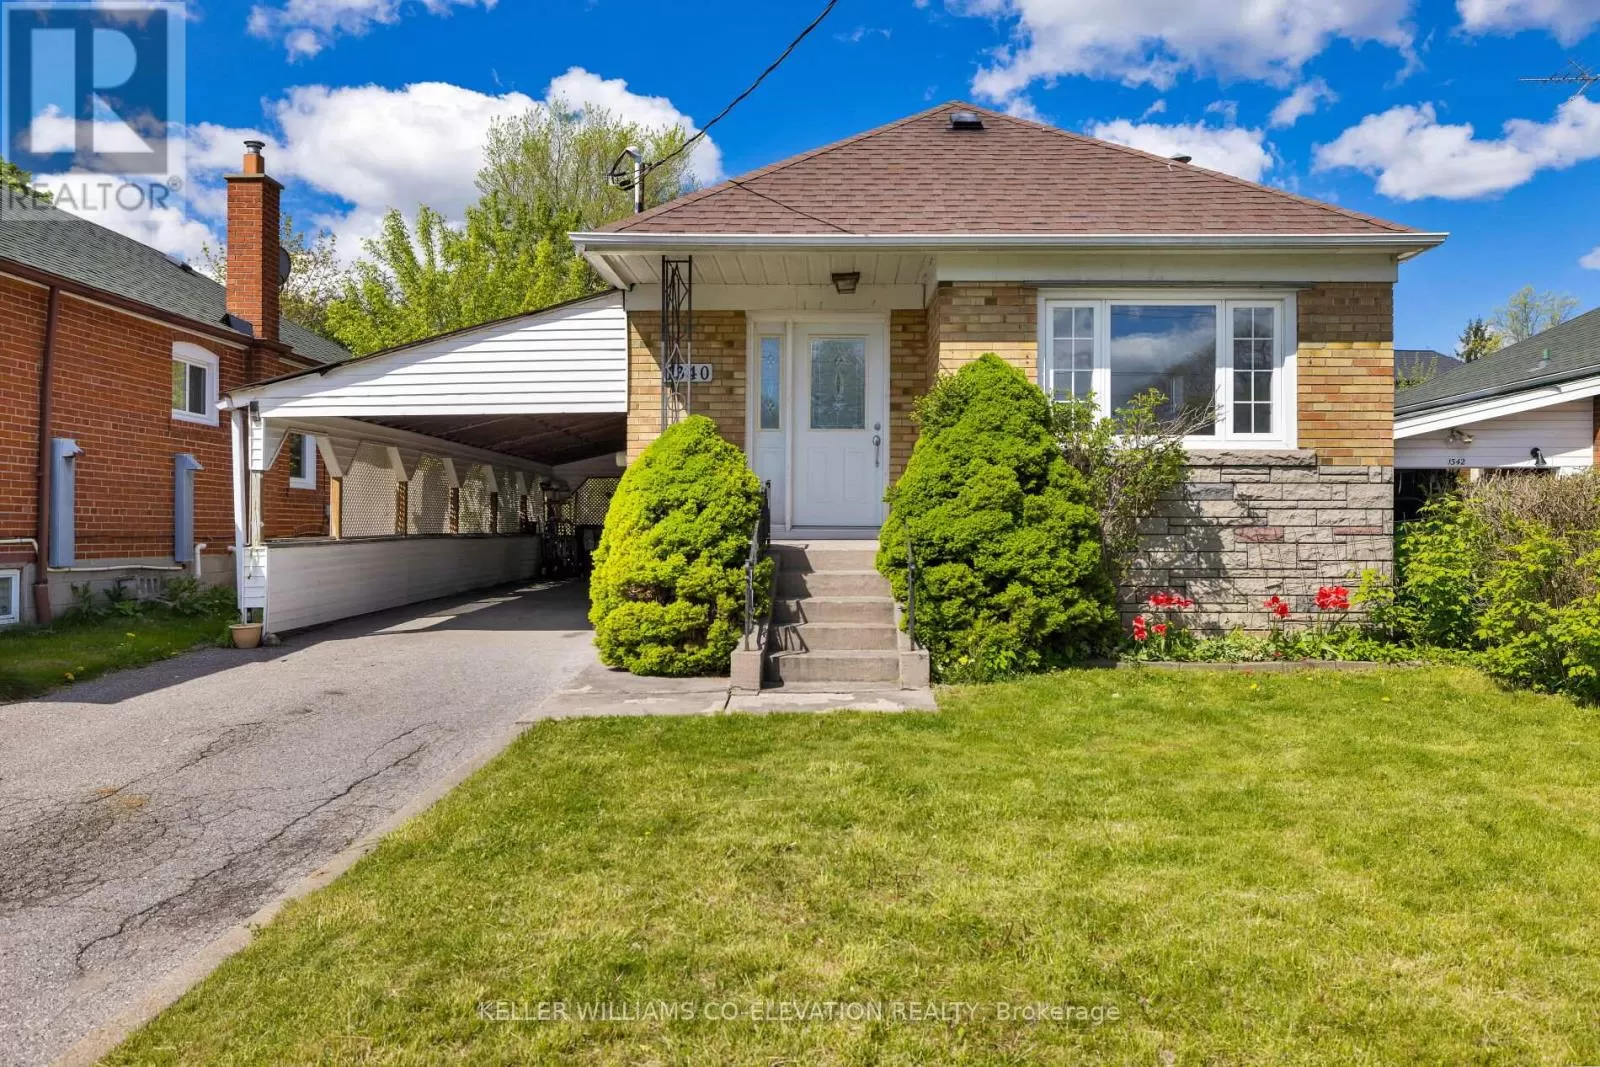 House for rent: 1340 Warden Avenue, Toronto, Ontario M1R 2R8